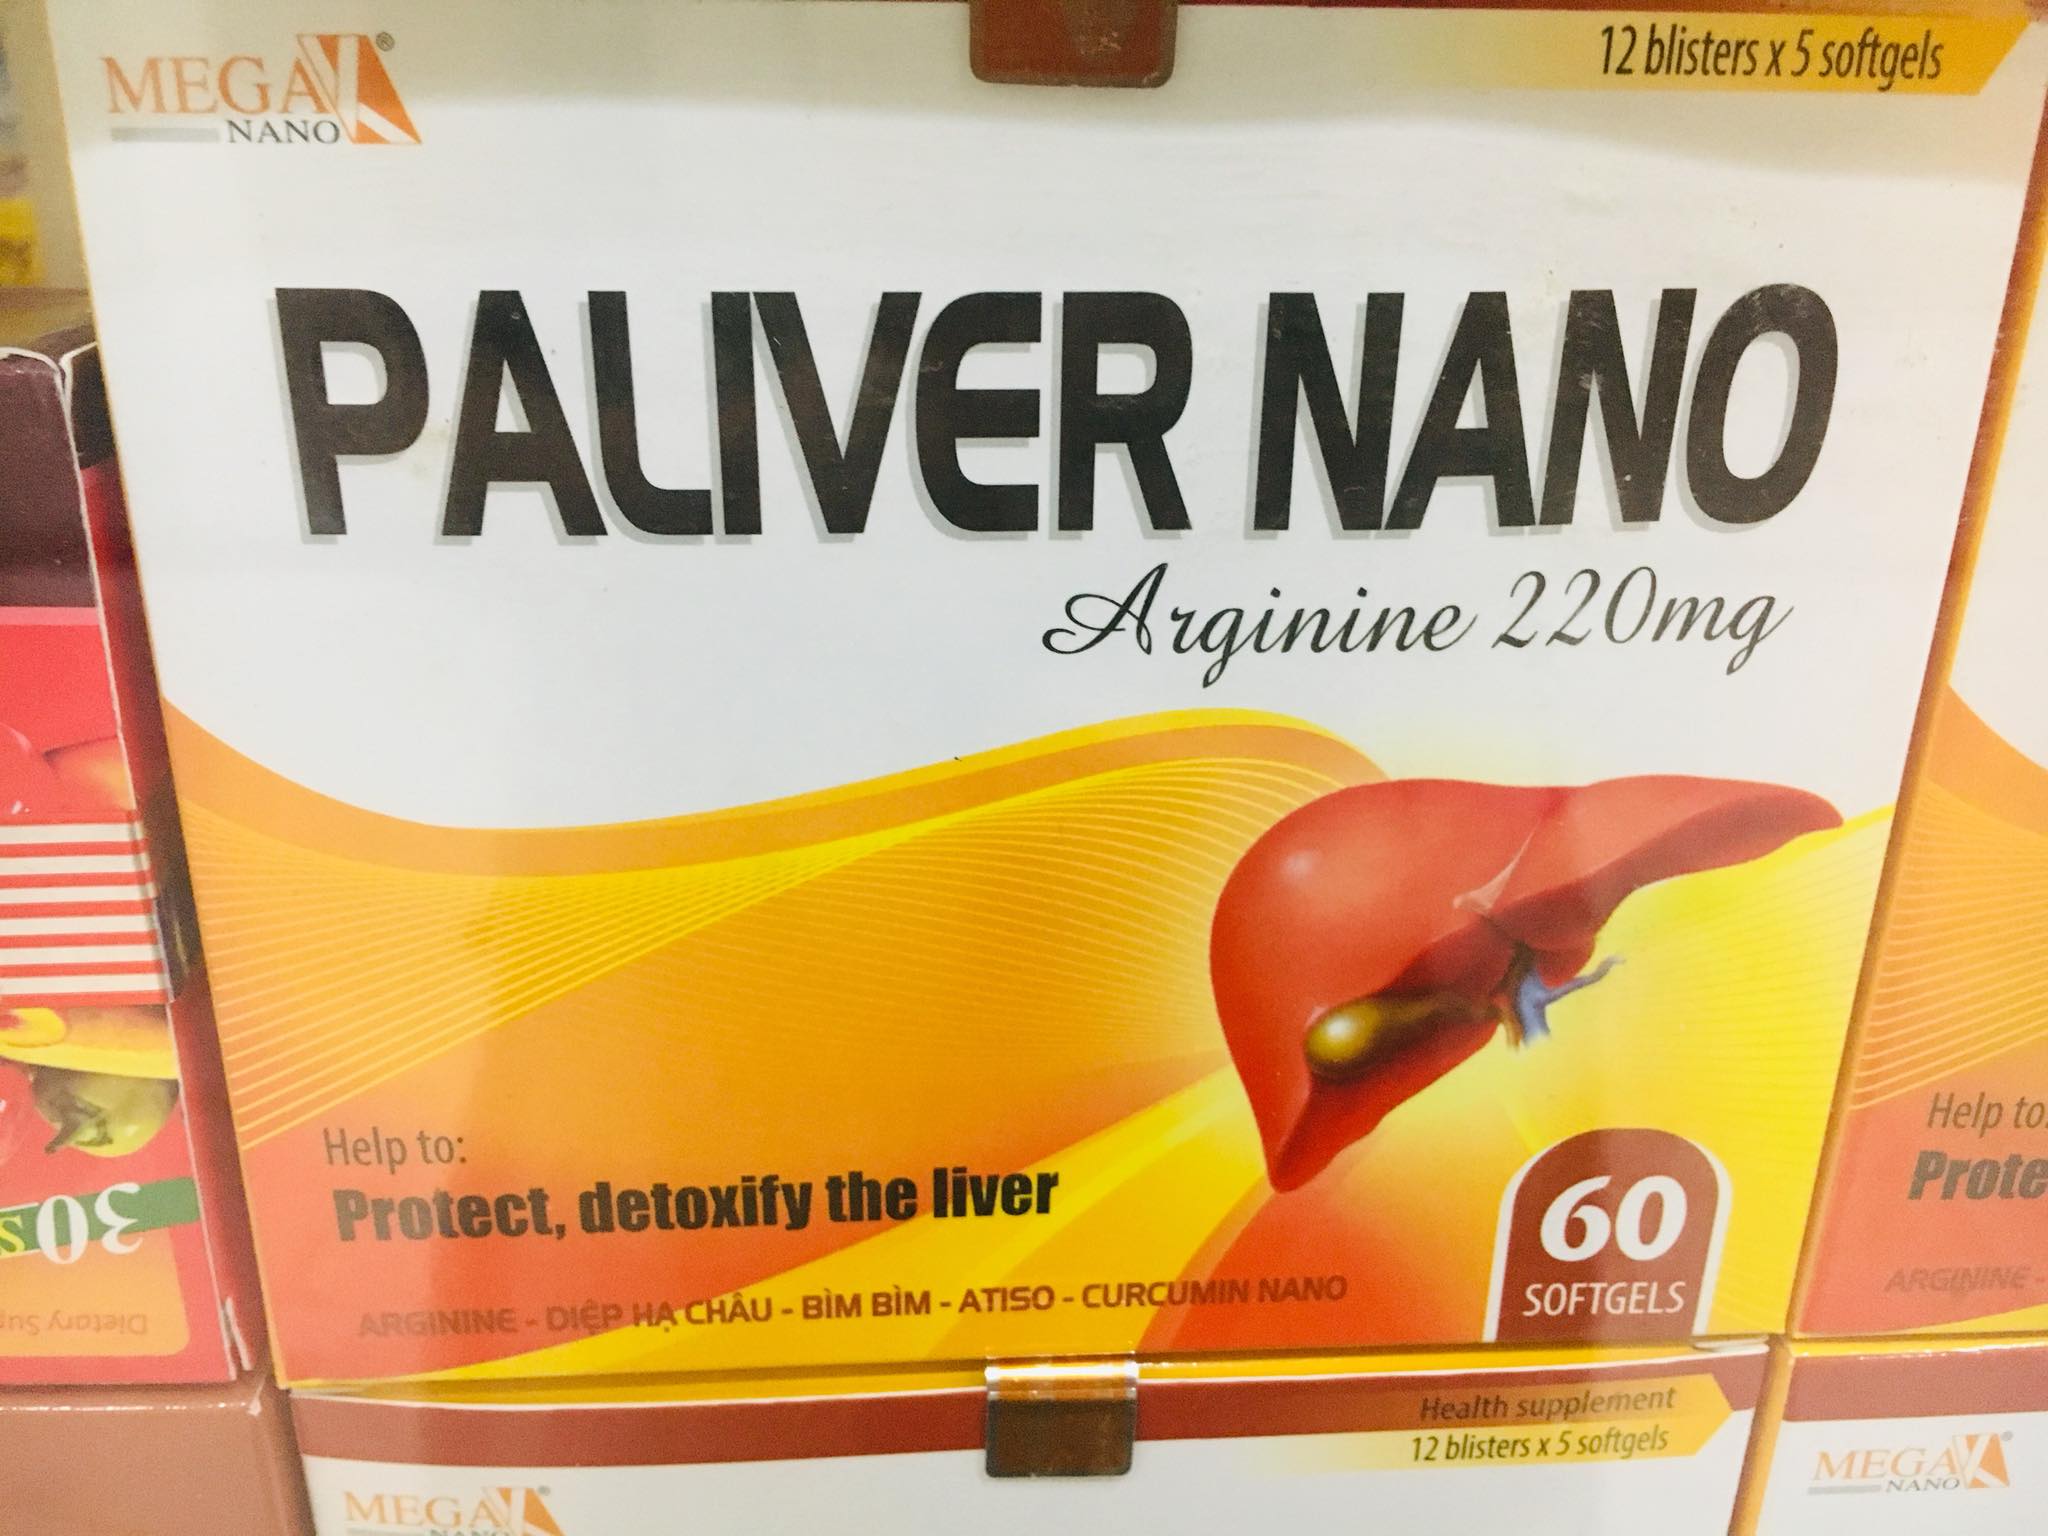 Paliver Nano